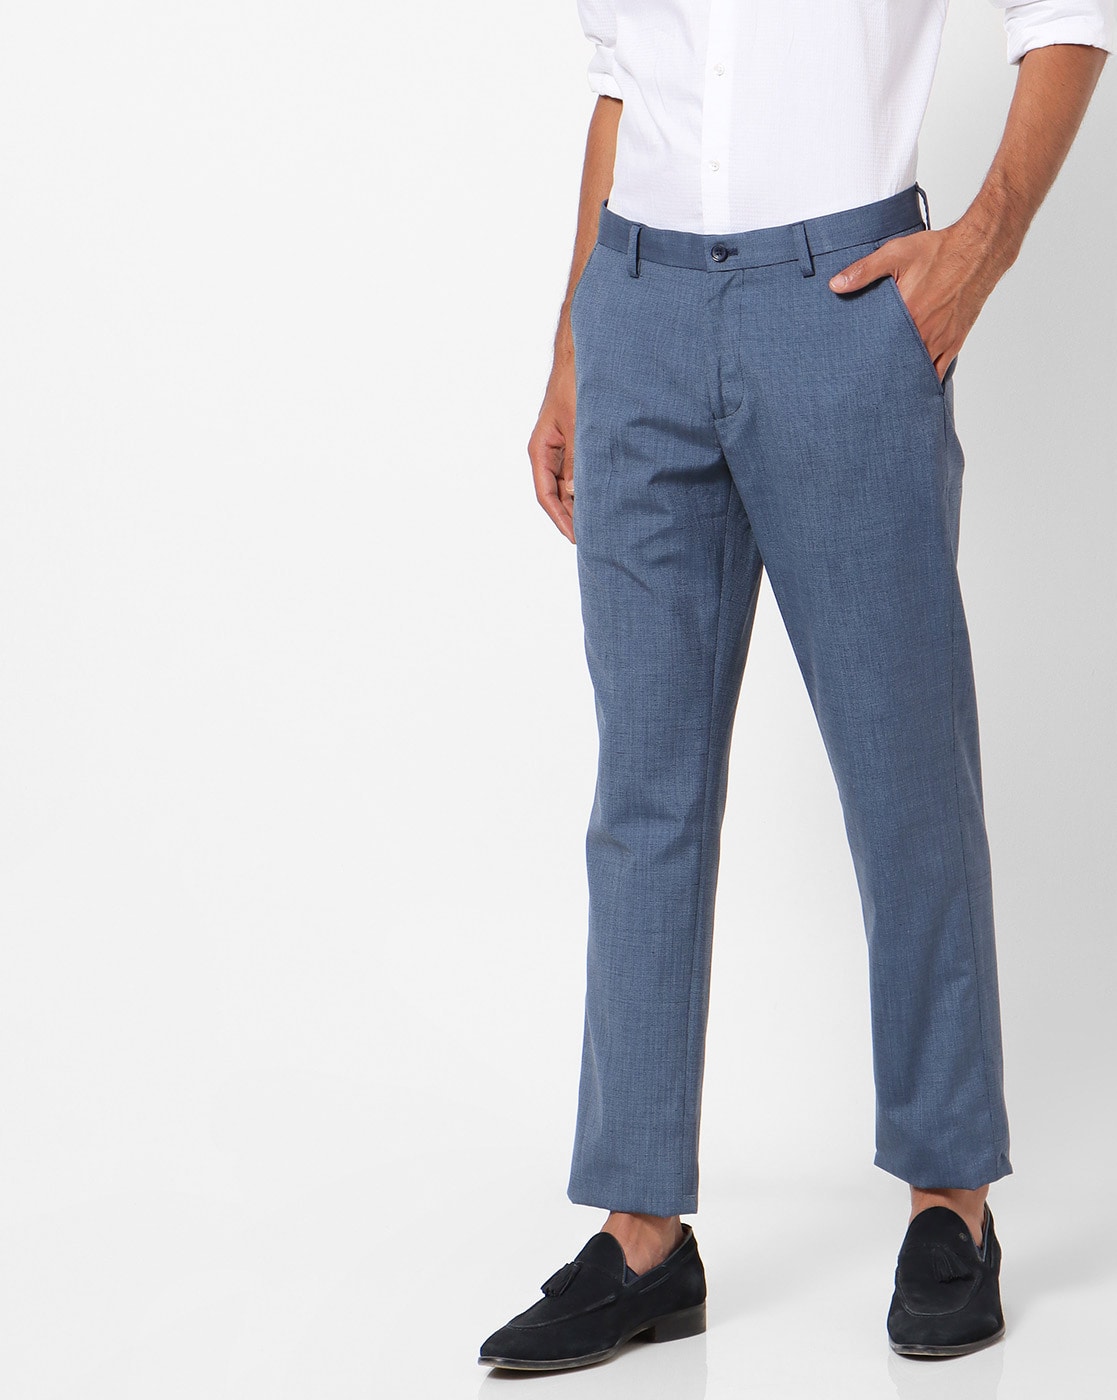 Buy Peacock Blue Trousers  Pants for Men by JADE BLUE Online  Ajiocom